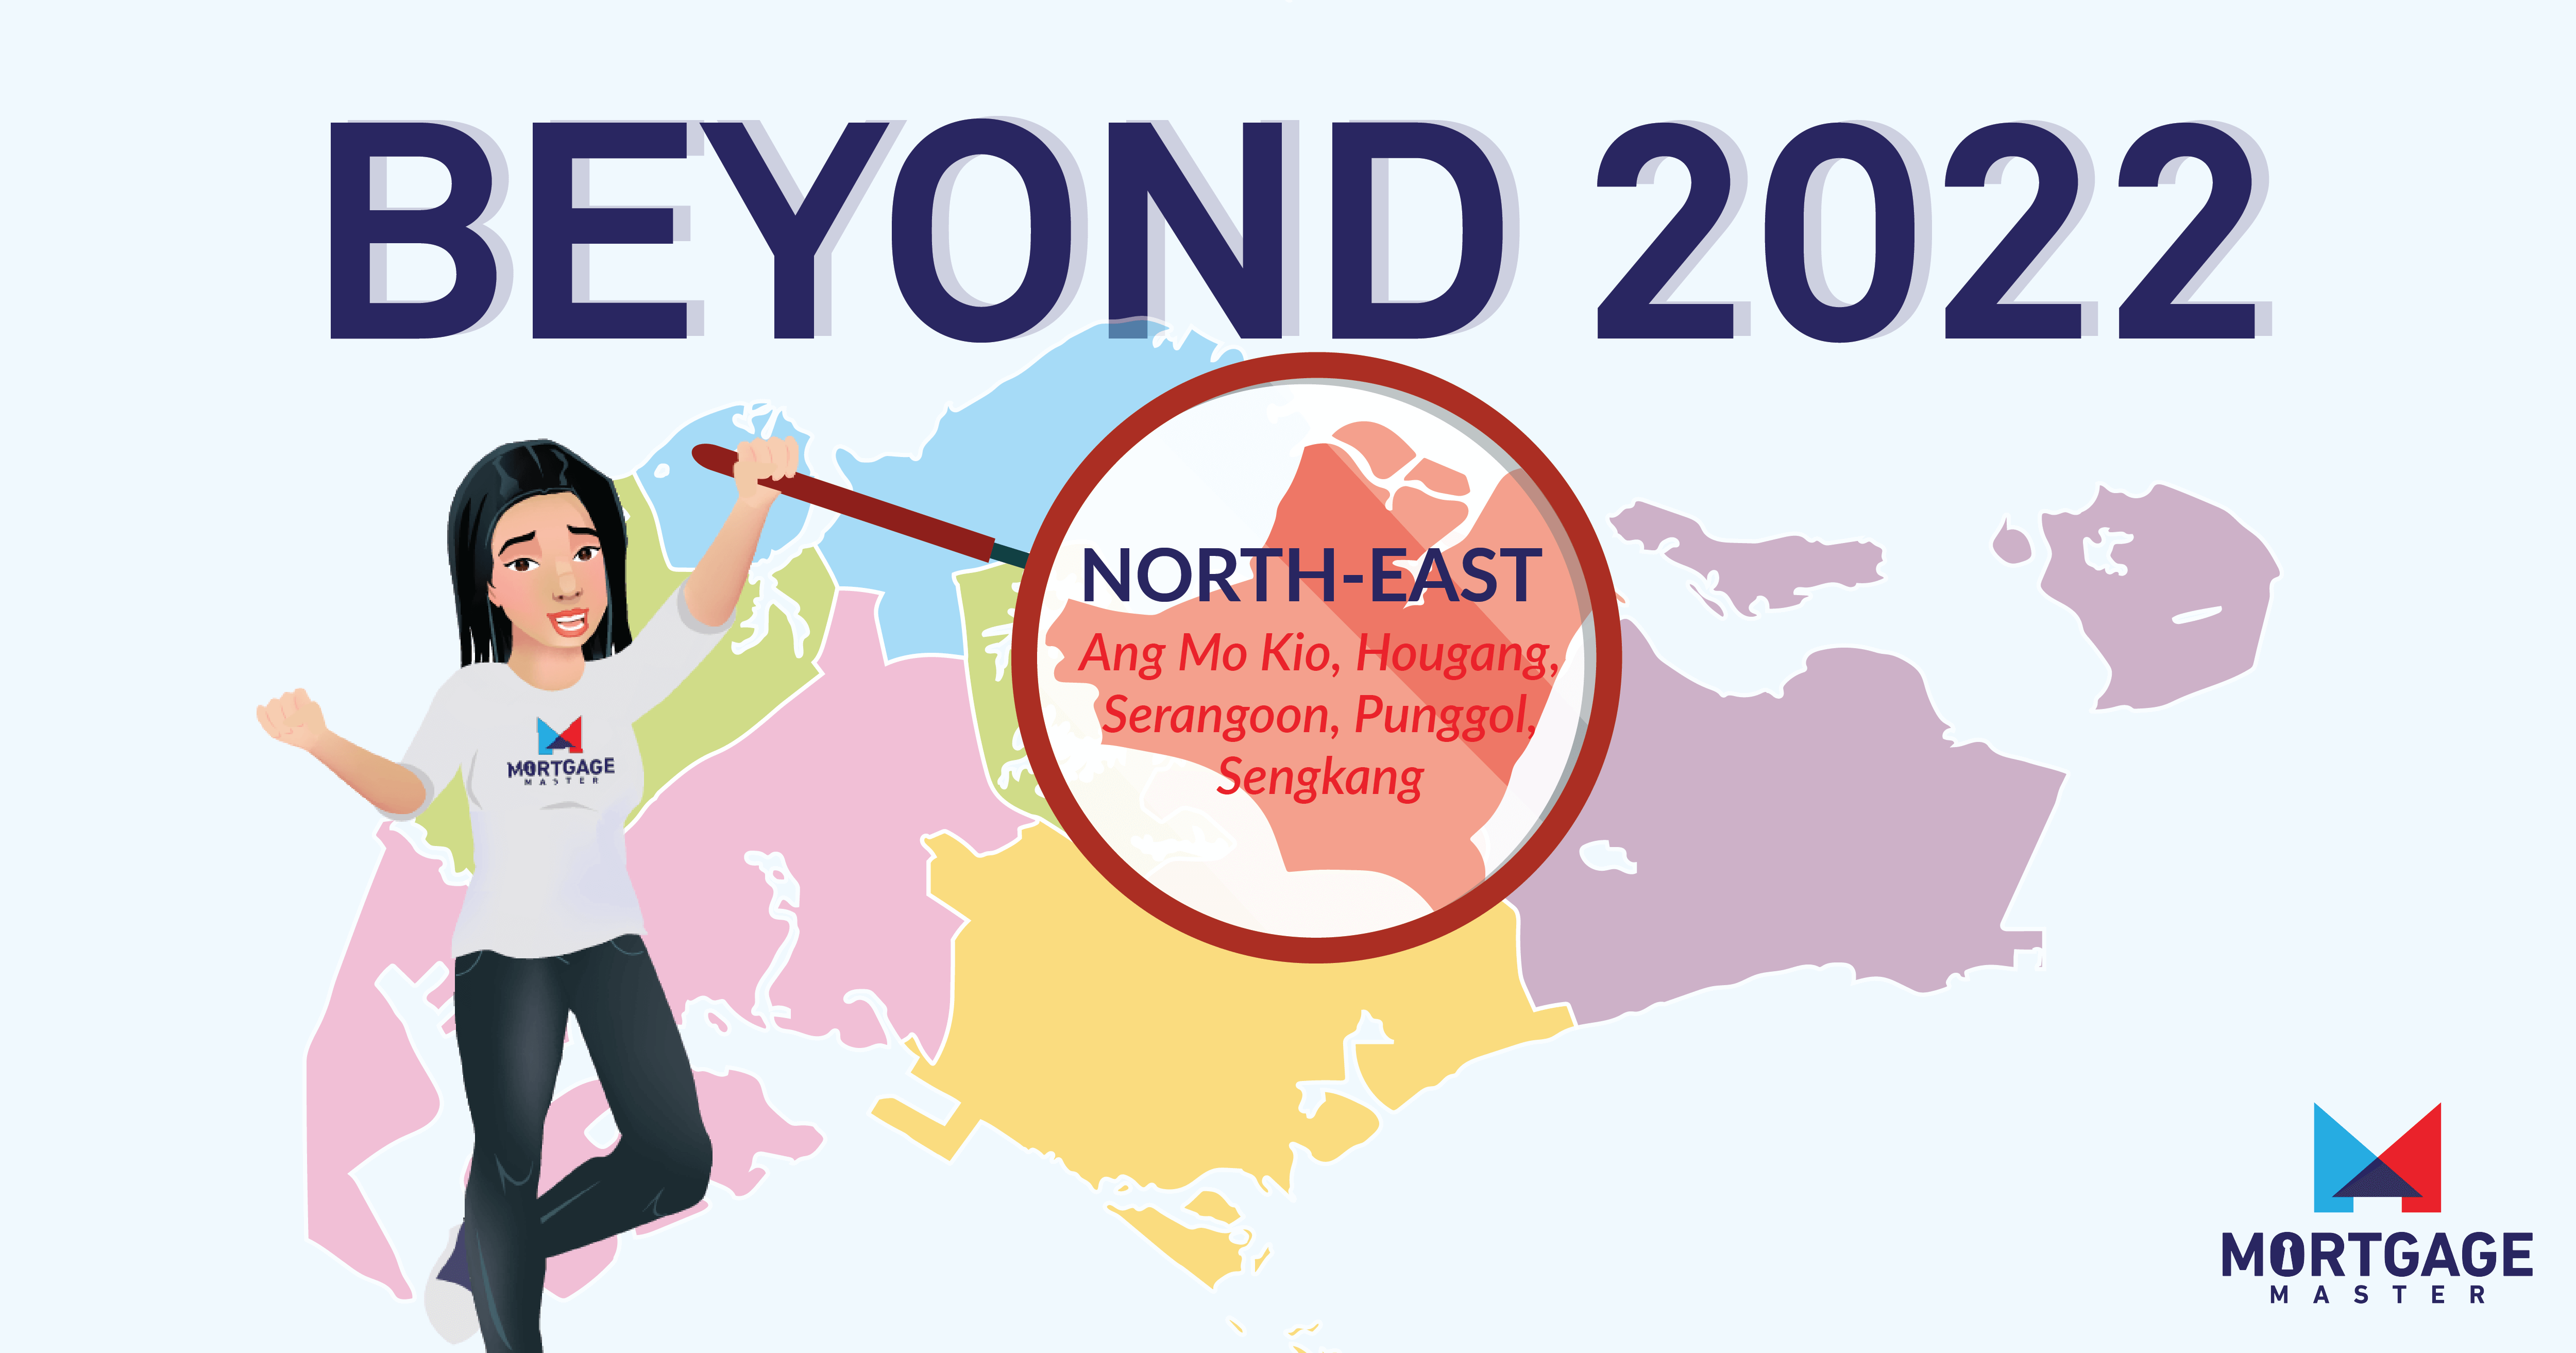 Beyond 2022: How Singapore’s Development Will Affect The Property Market (Ang Mo Kio, Hougang, Serangoon, Punggol, Sengkang)